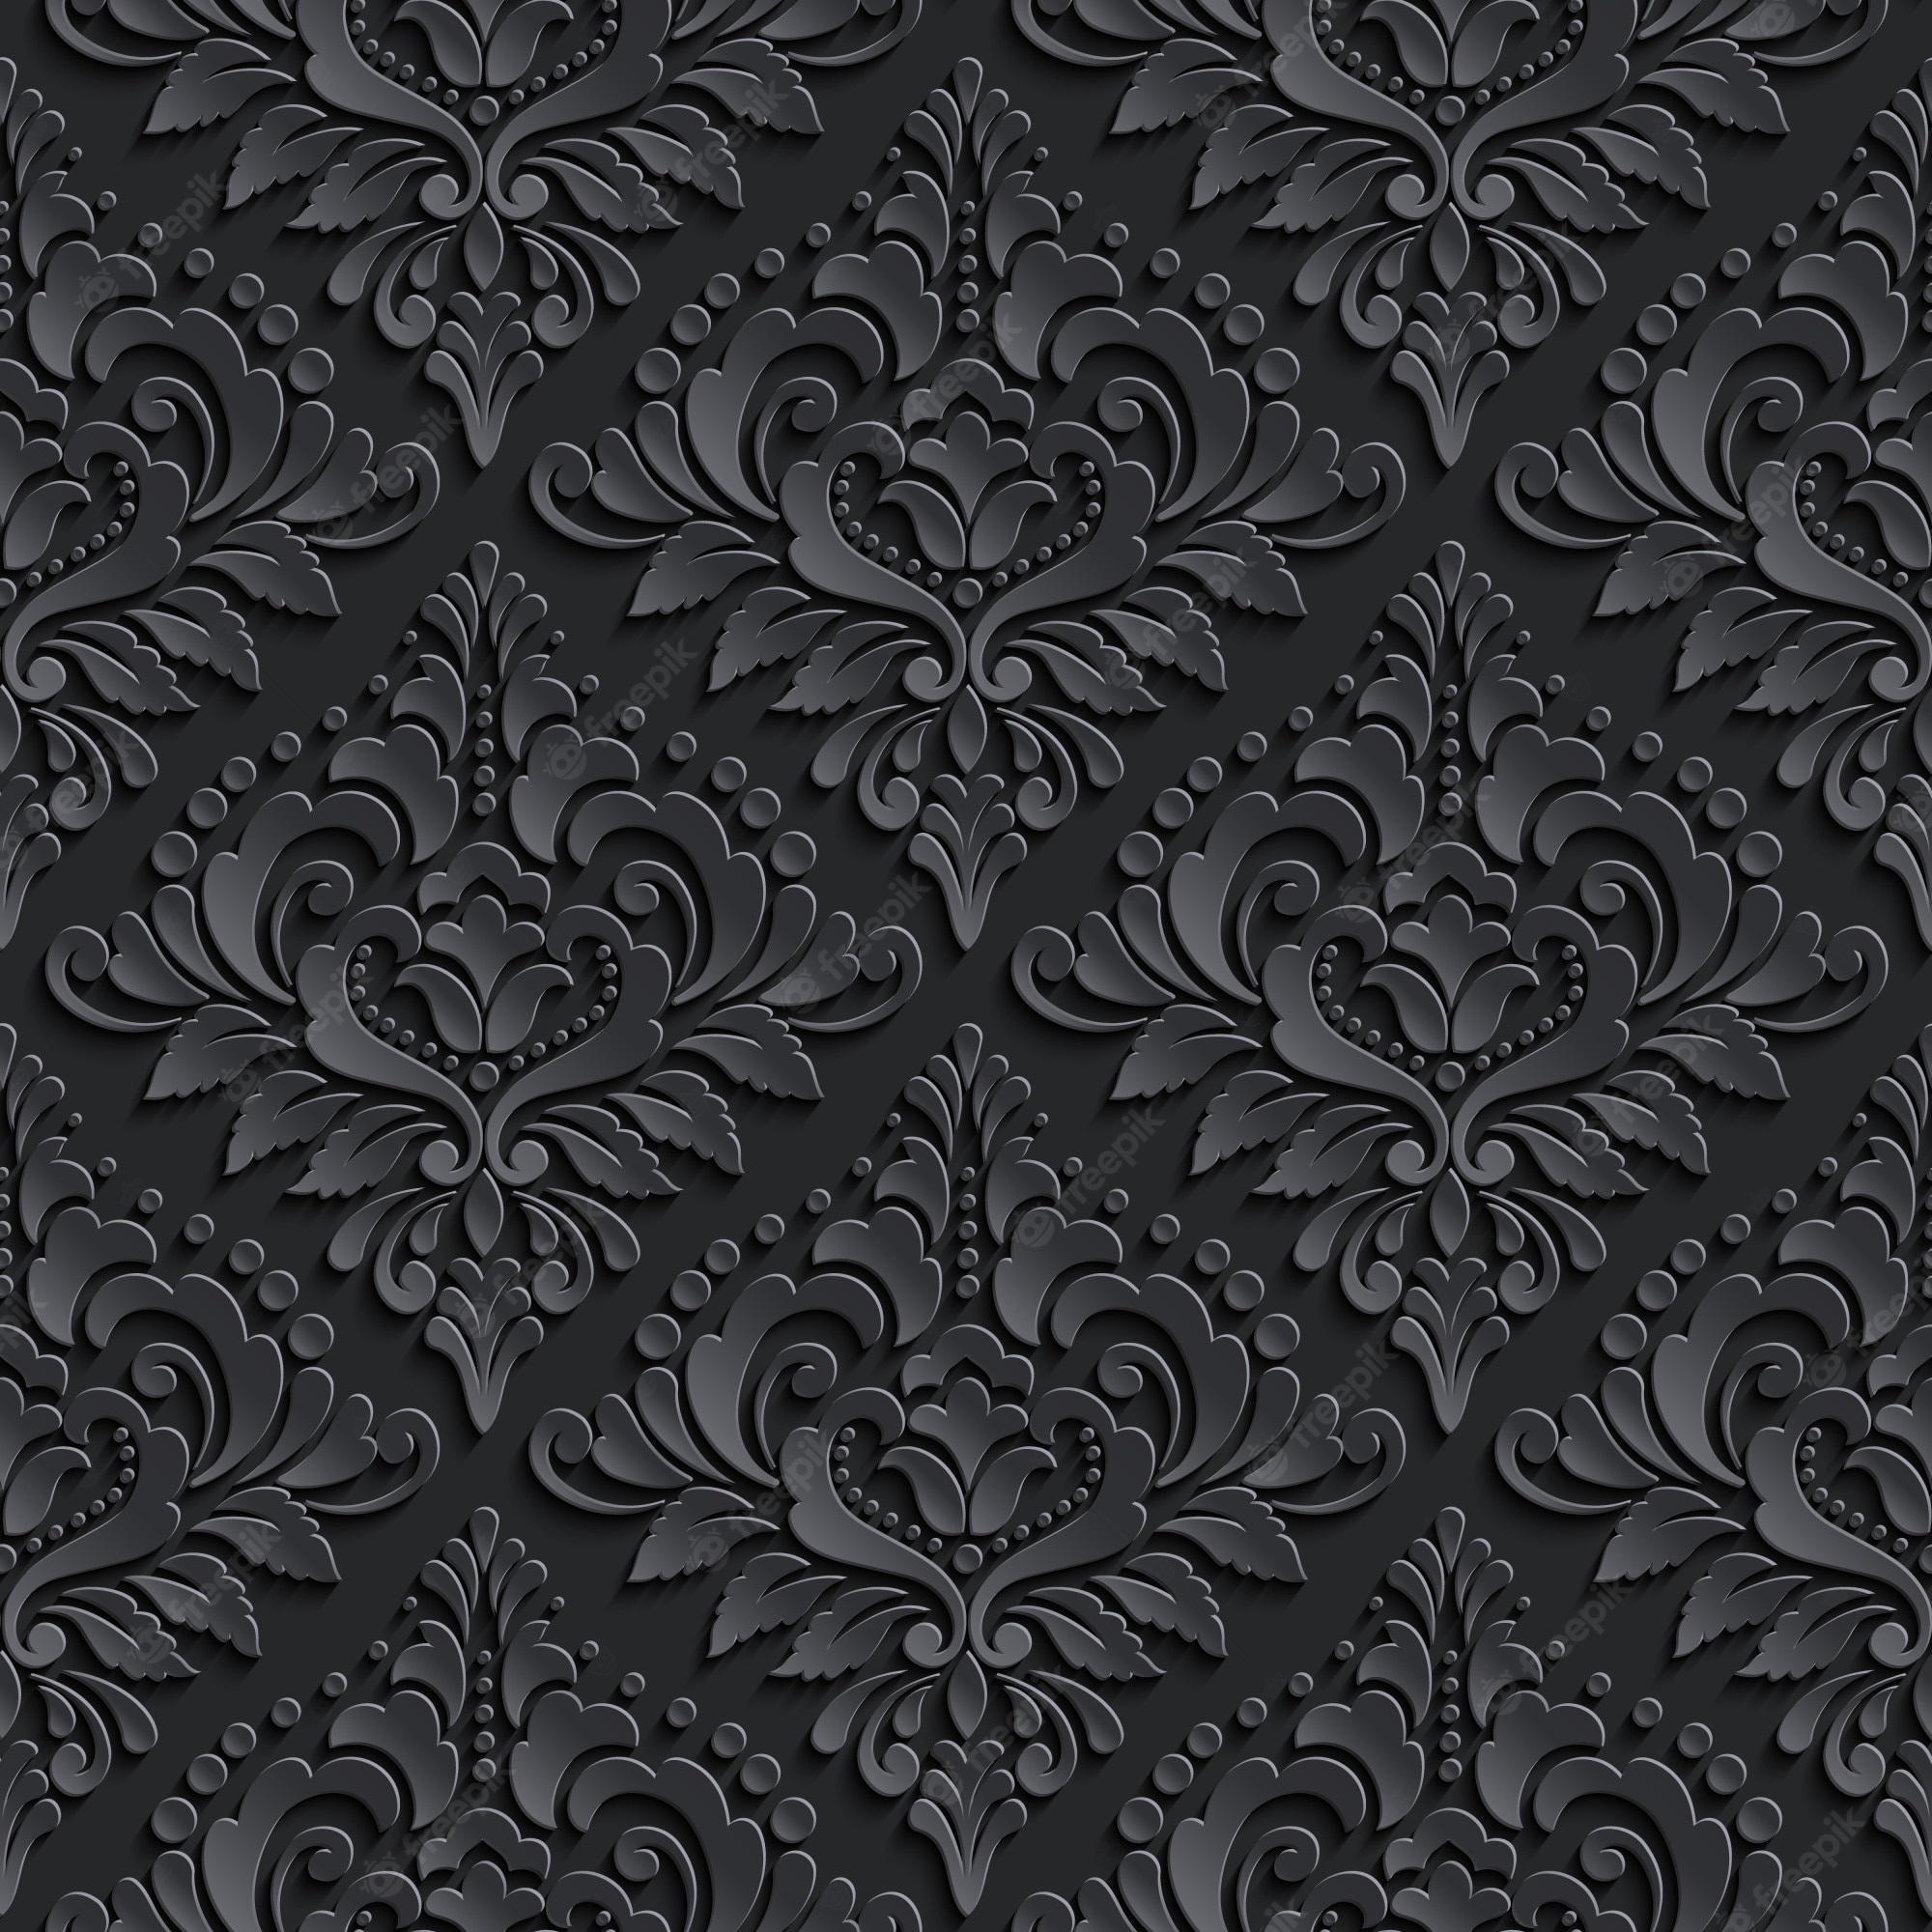 Free Vector. Dark damask seamless pattern background. elegant luxury texture for wallpaper